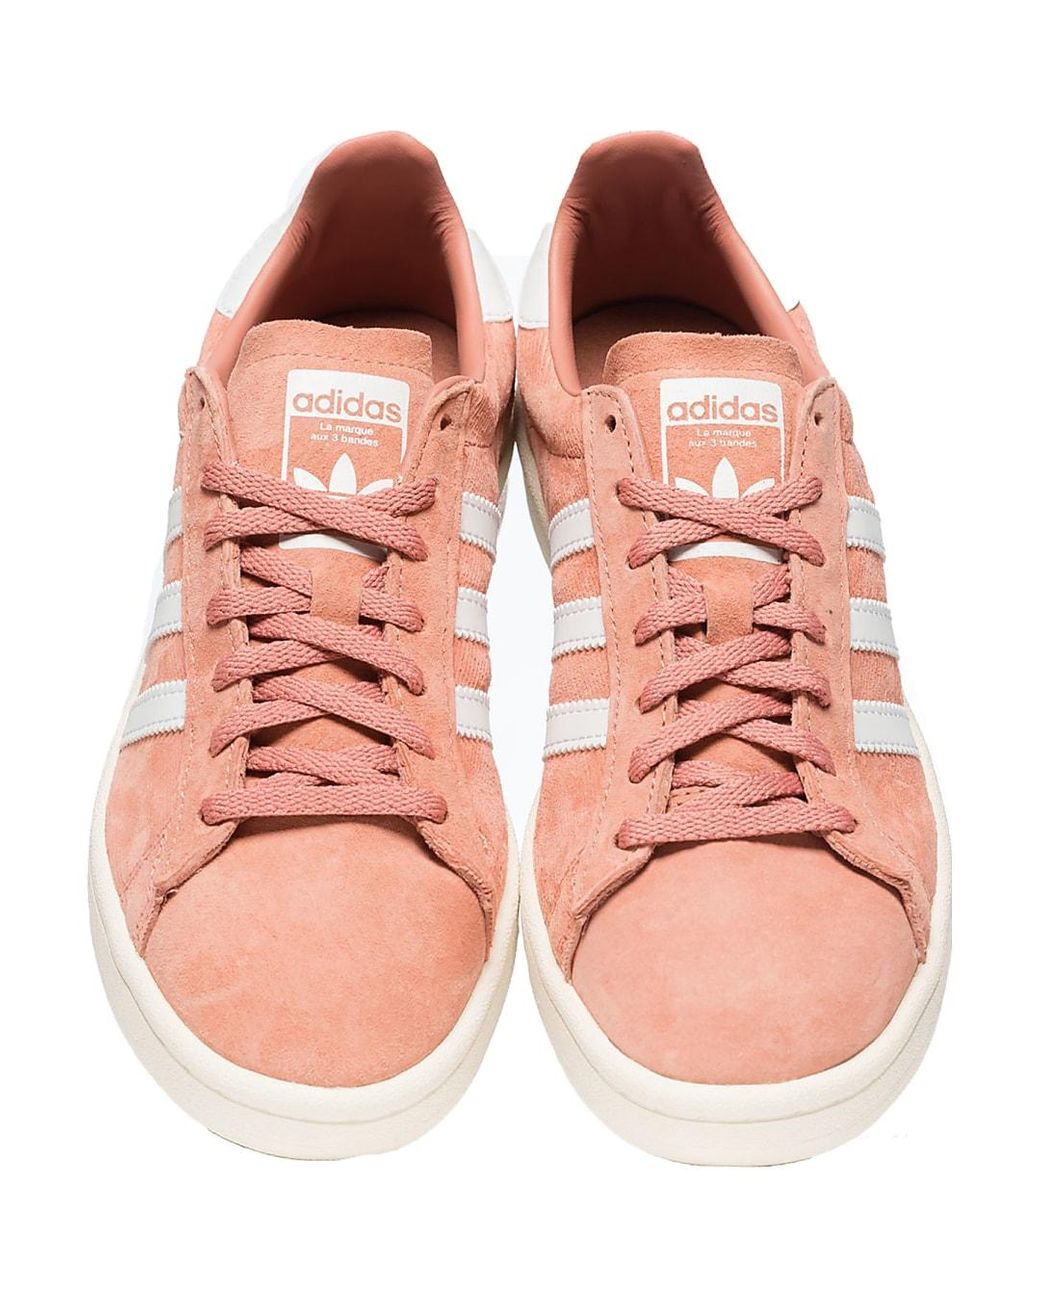 adidas Originals Rubber Campus in Peach (Pink) - Save 69% | Lyst